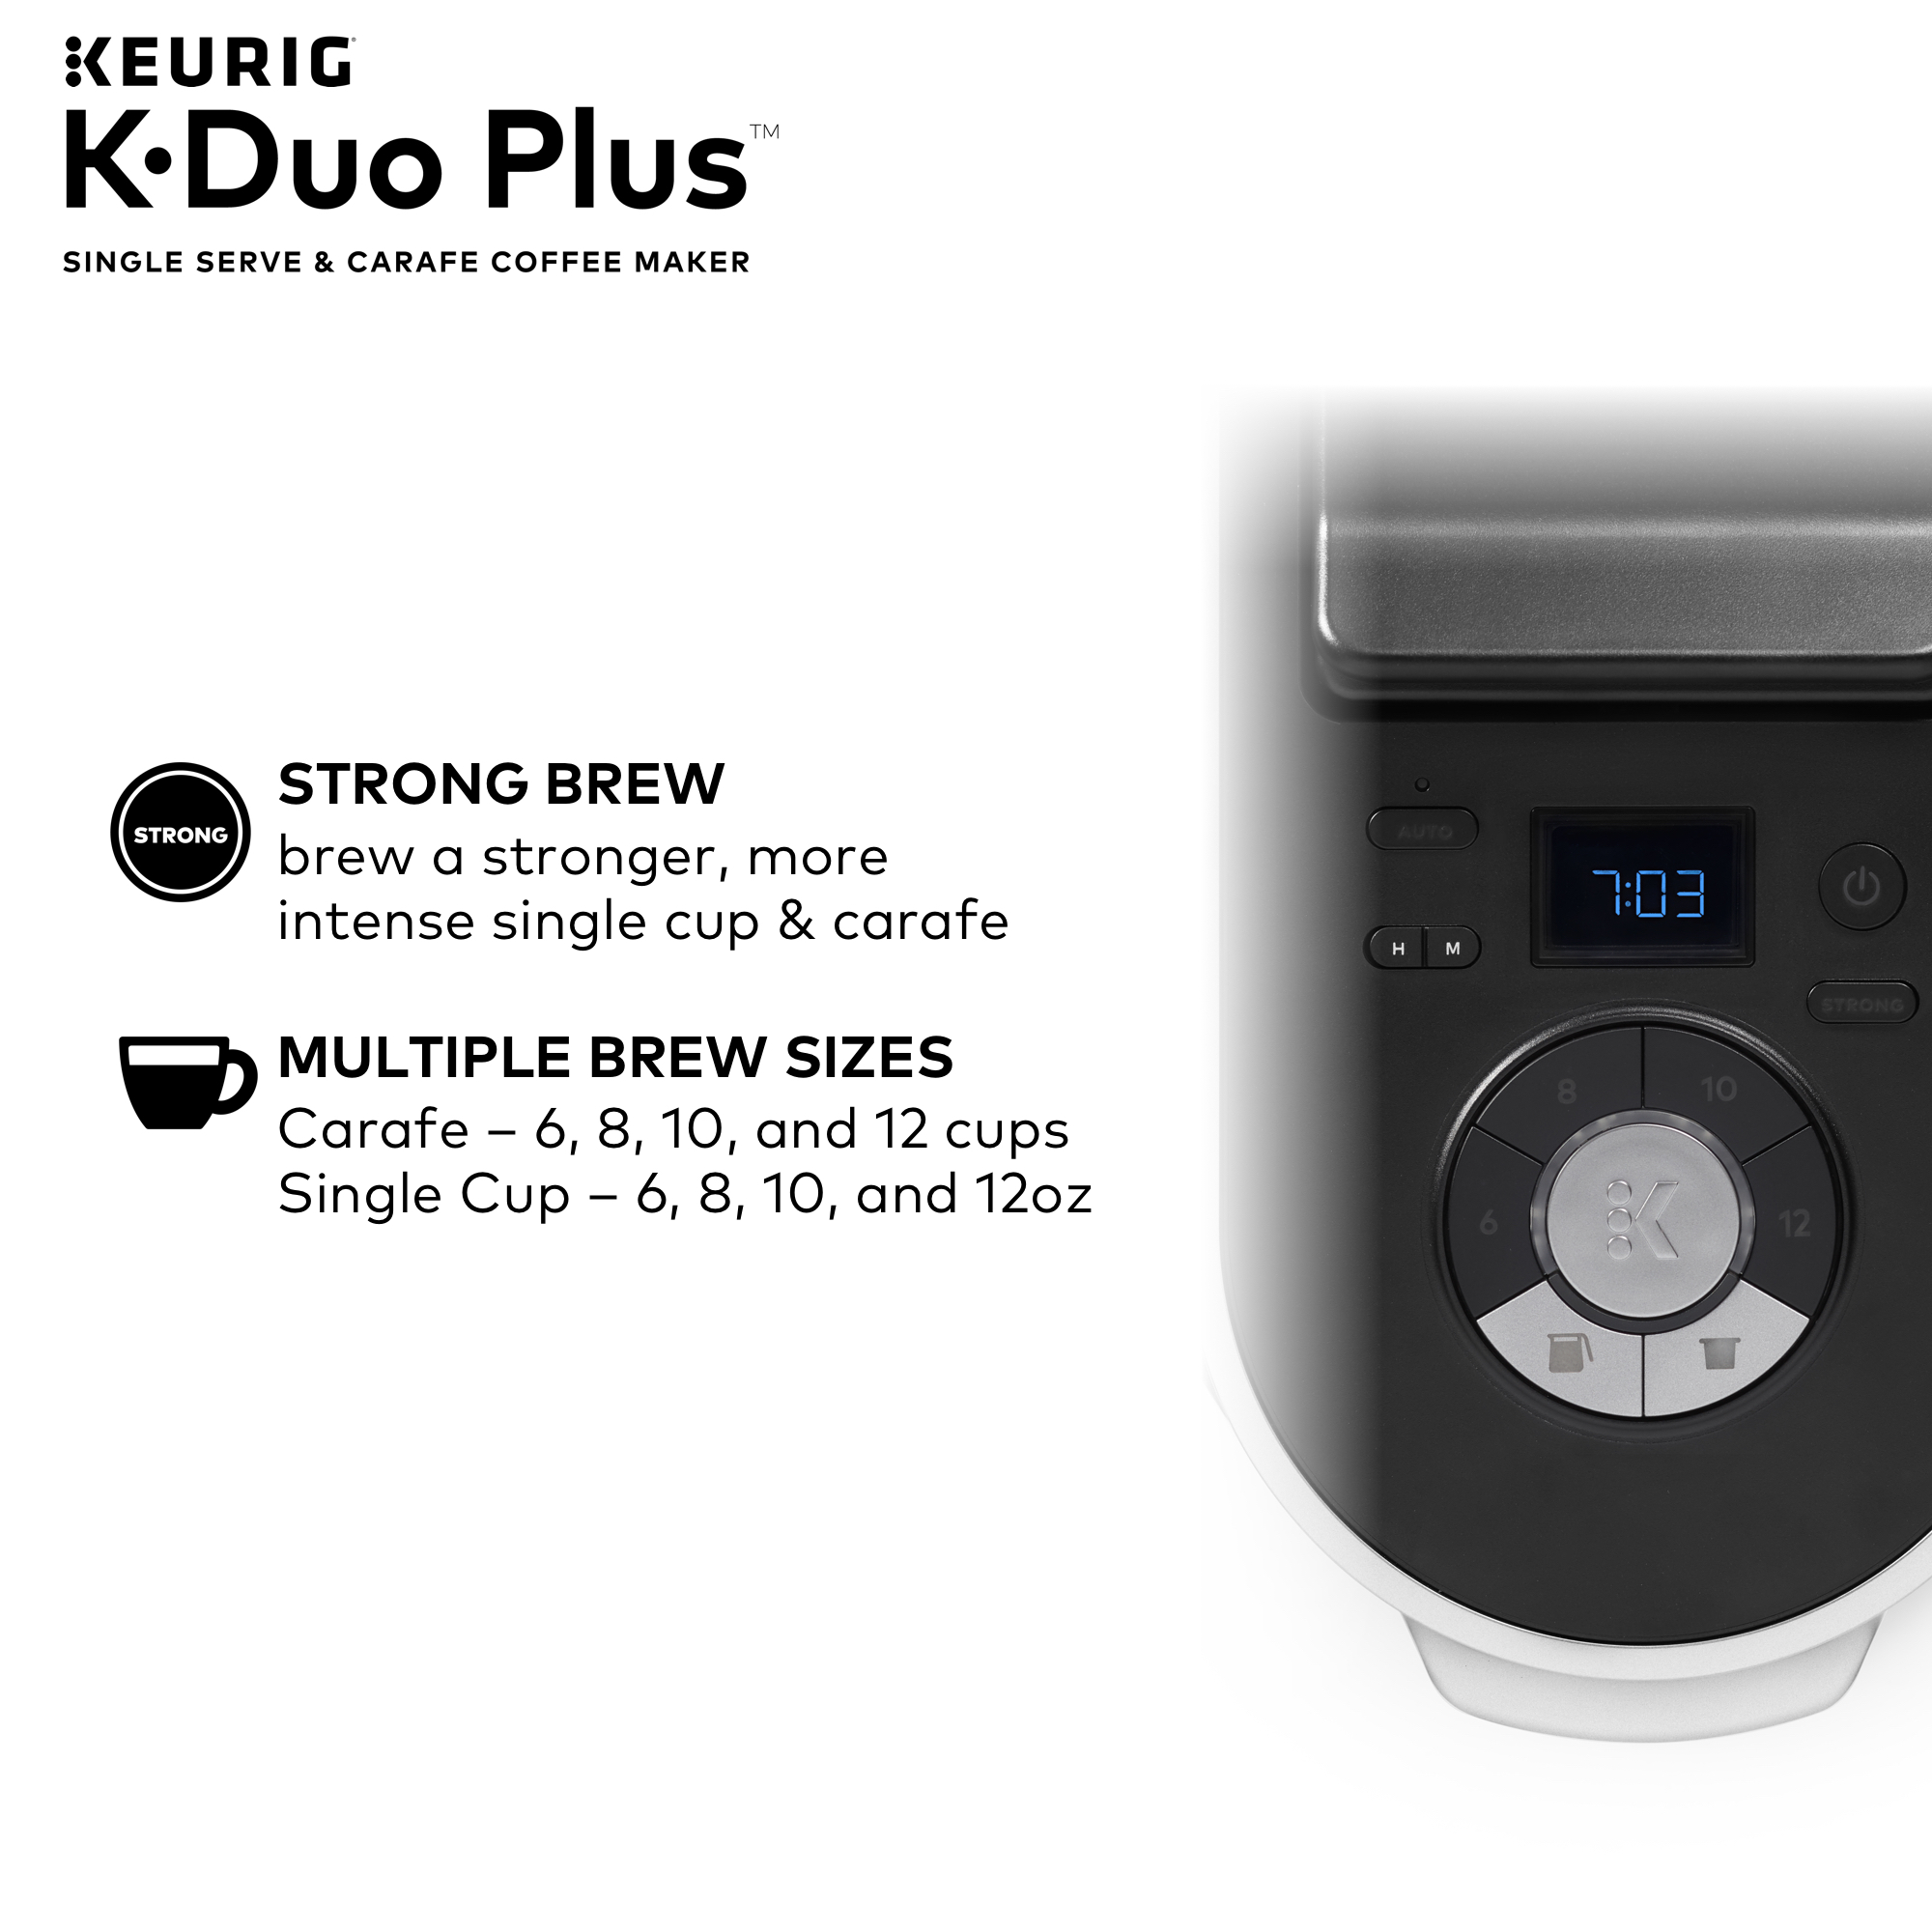 Keurig K-Duo Plus Single Serve & Carafe Coffee Maker - image 7 of 24